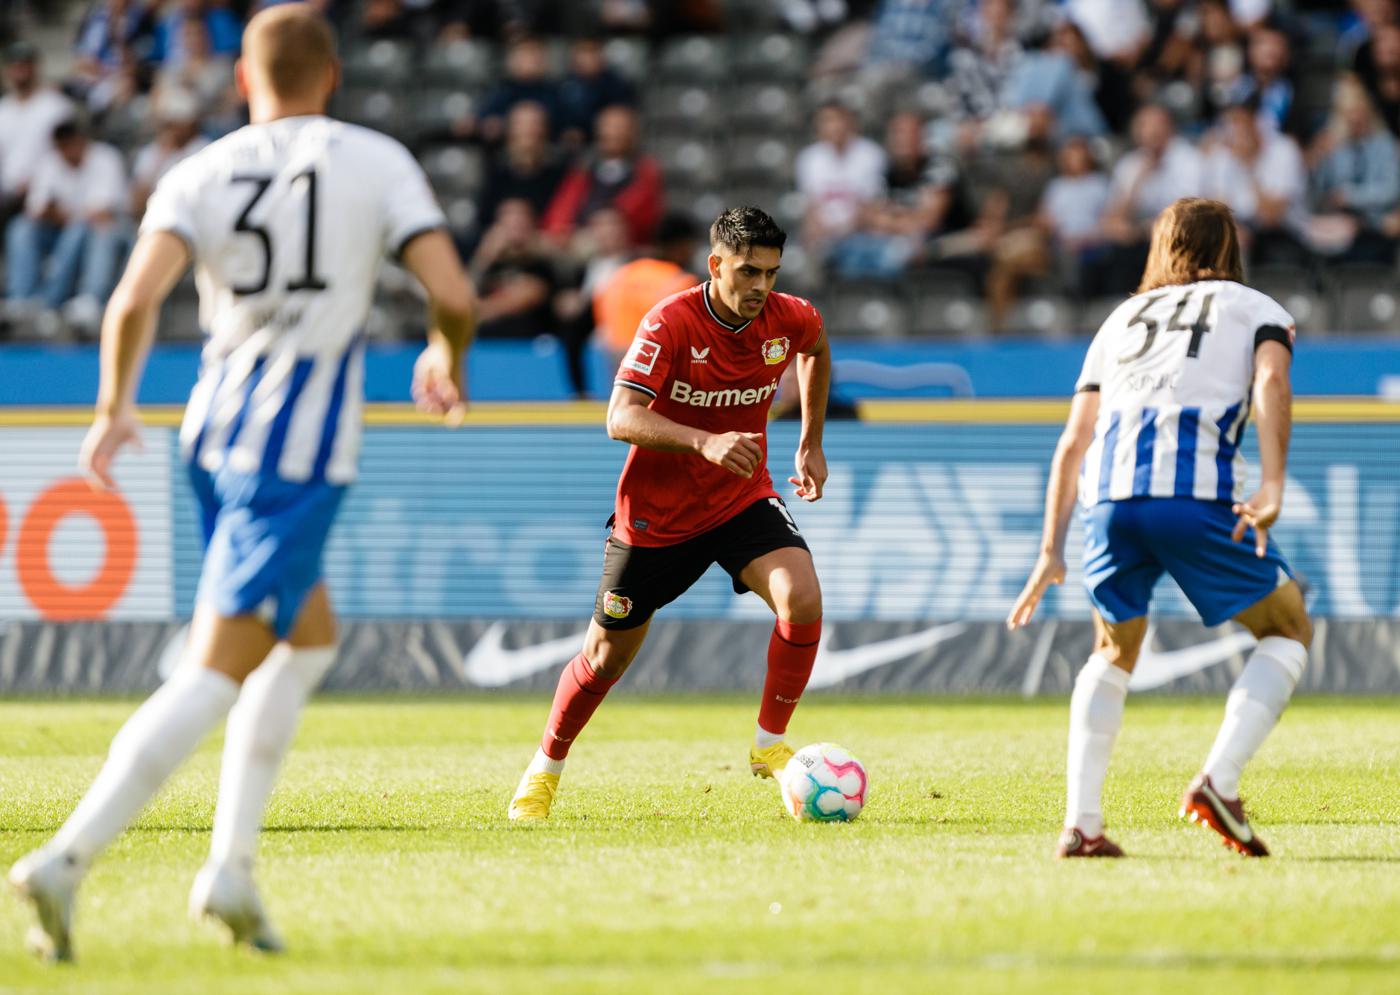 Bayer - Hertha - 4:1. German Championship, round 23. Match review, statistics.